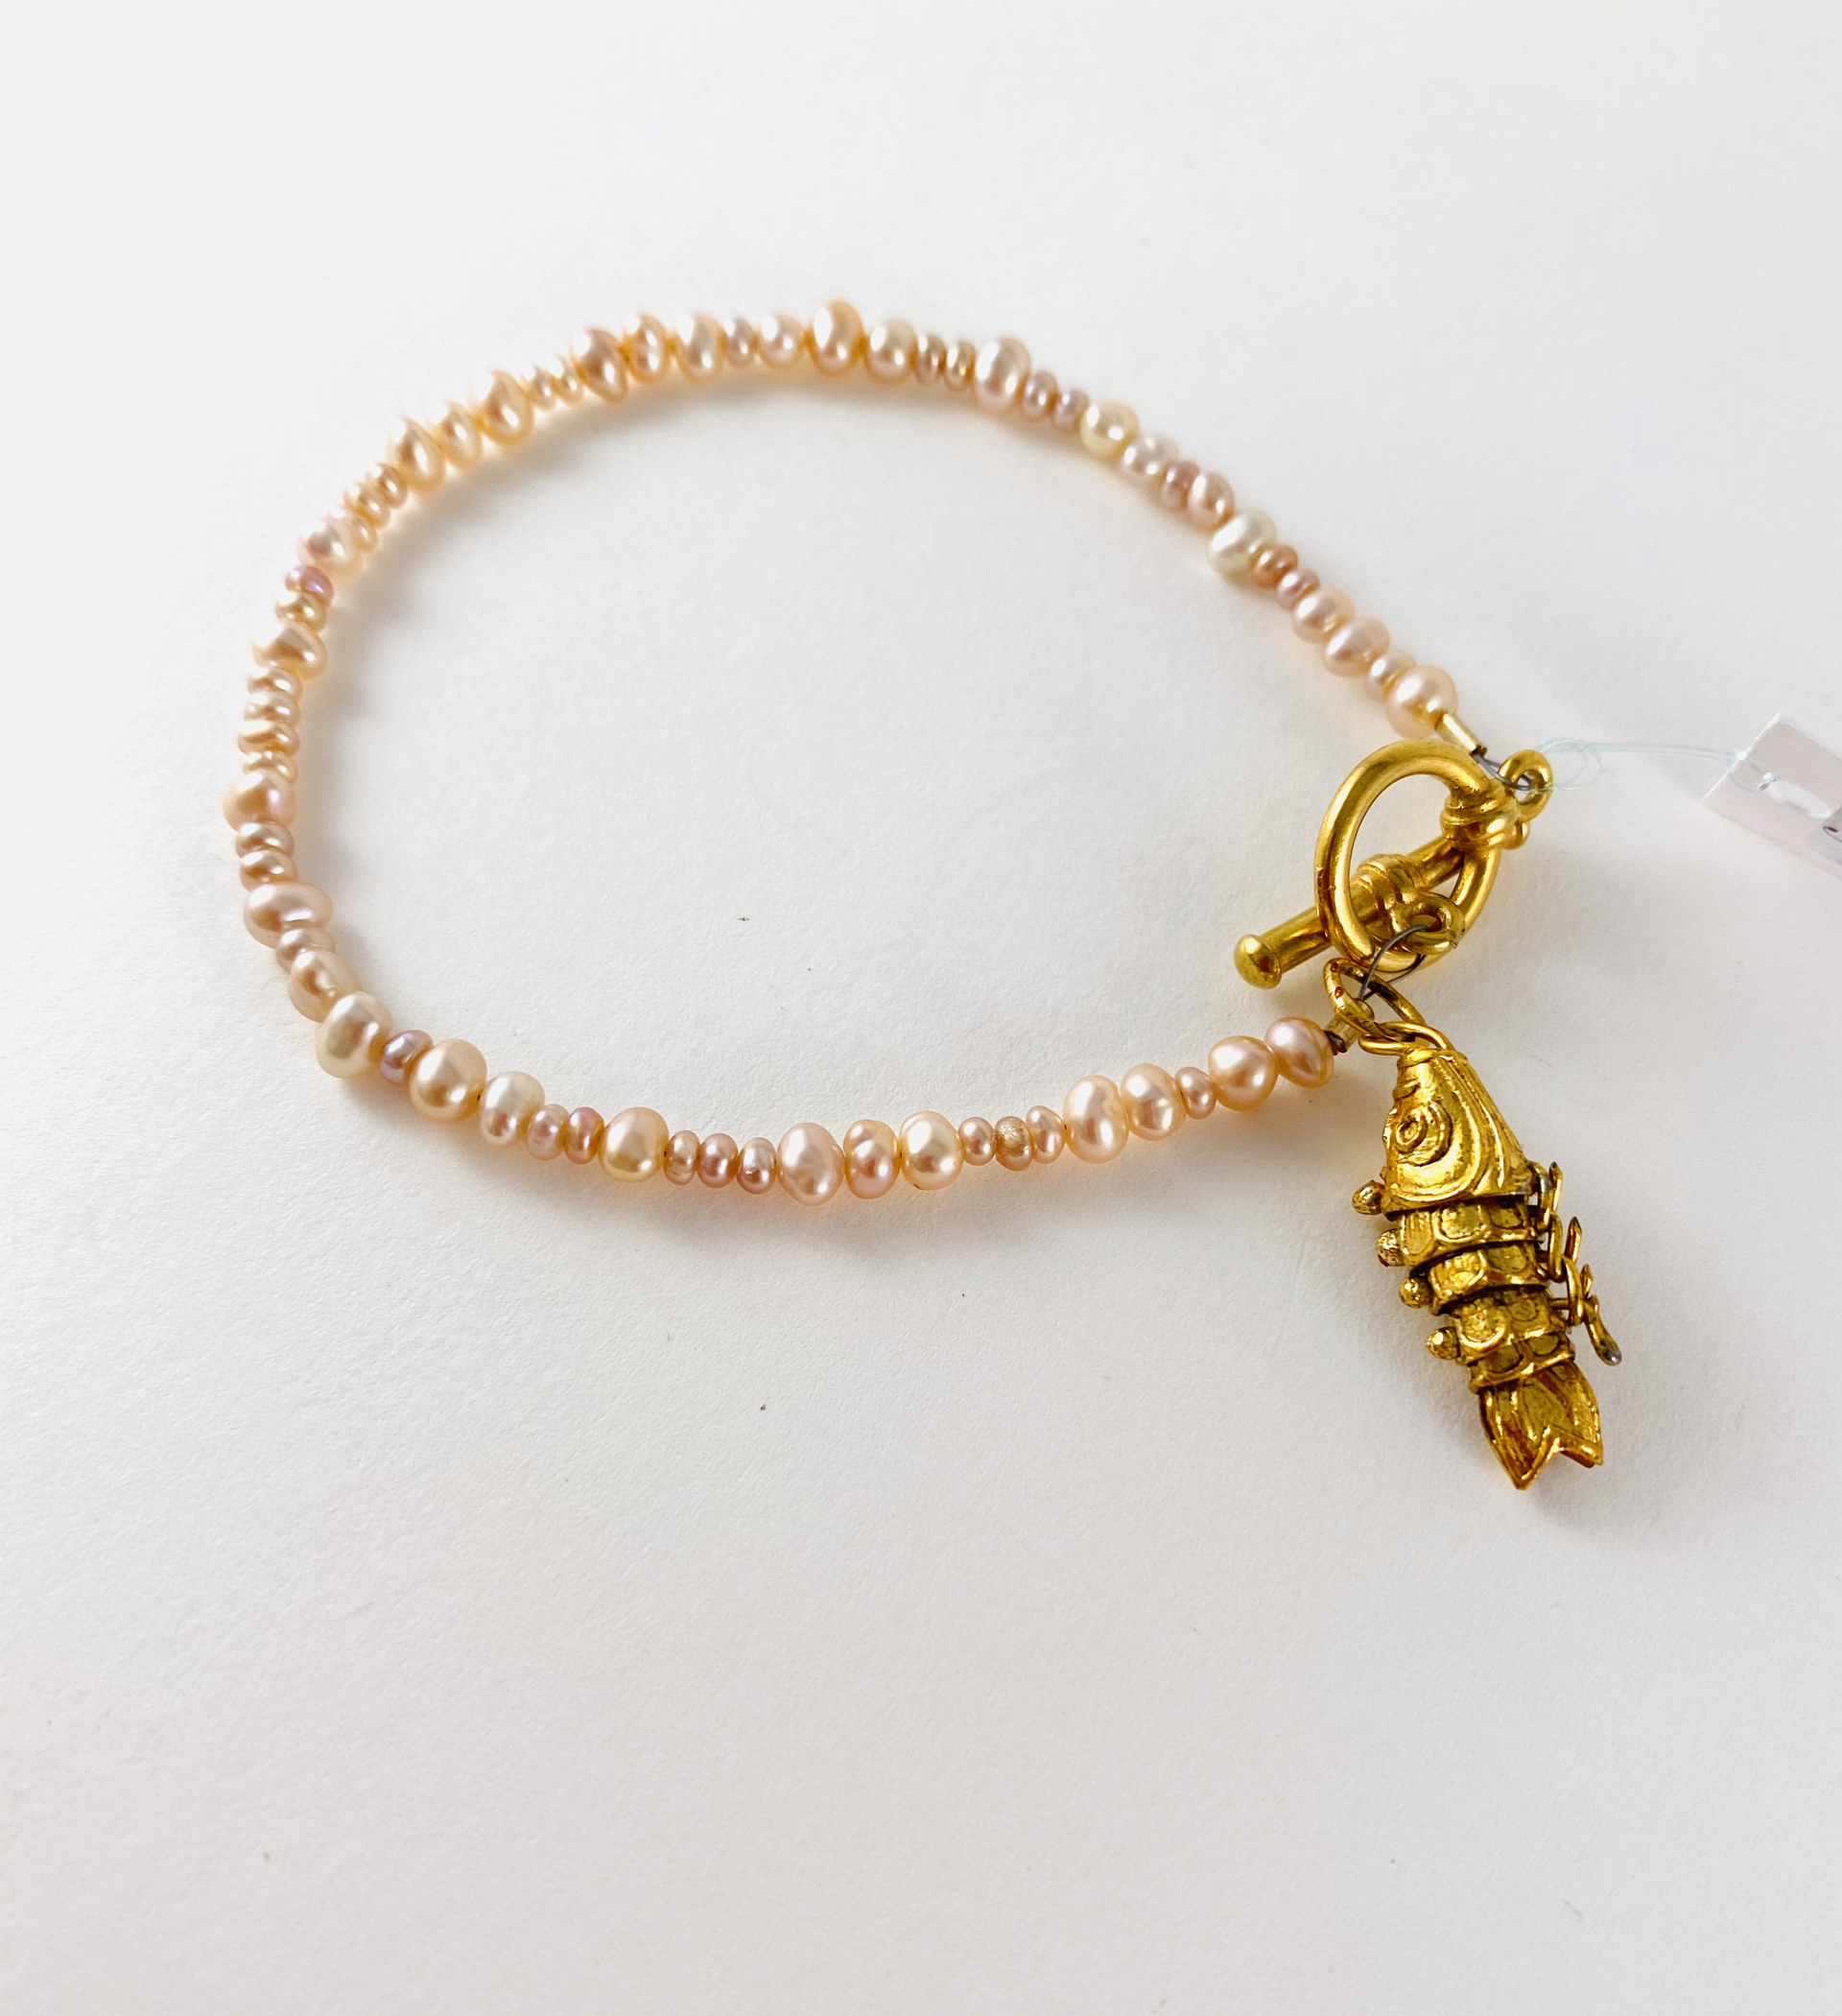 Peach Tiny Pearl Bracelet, Brass Toggle and Charm P7 by Nance Trueworthy